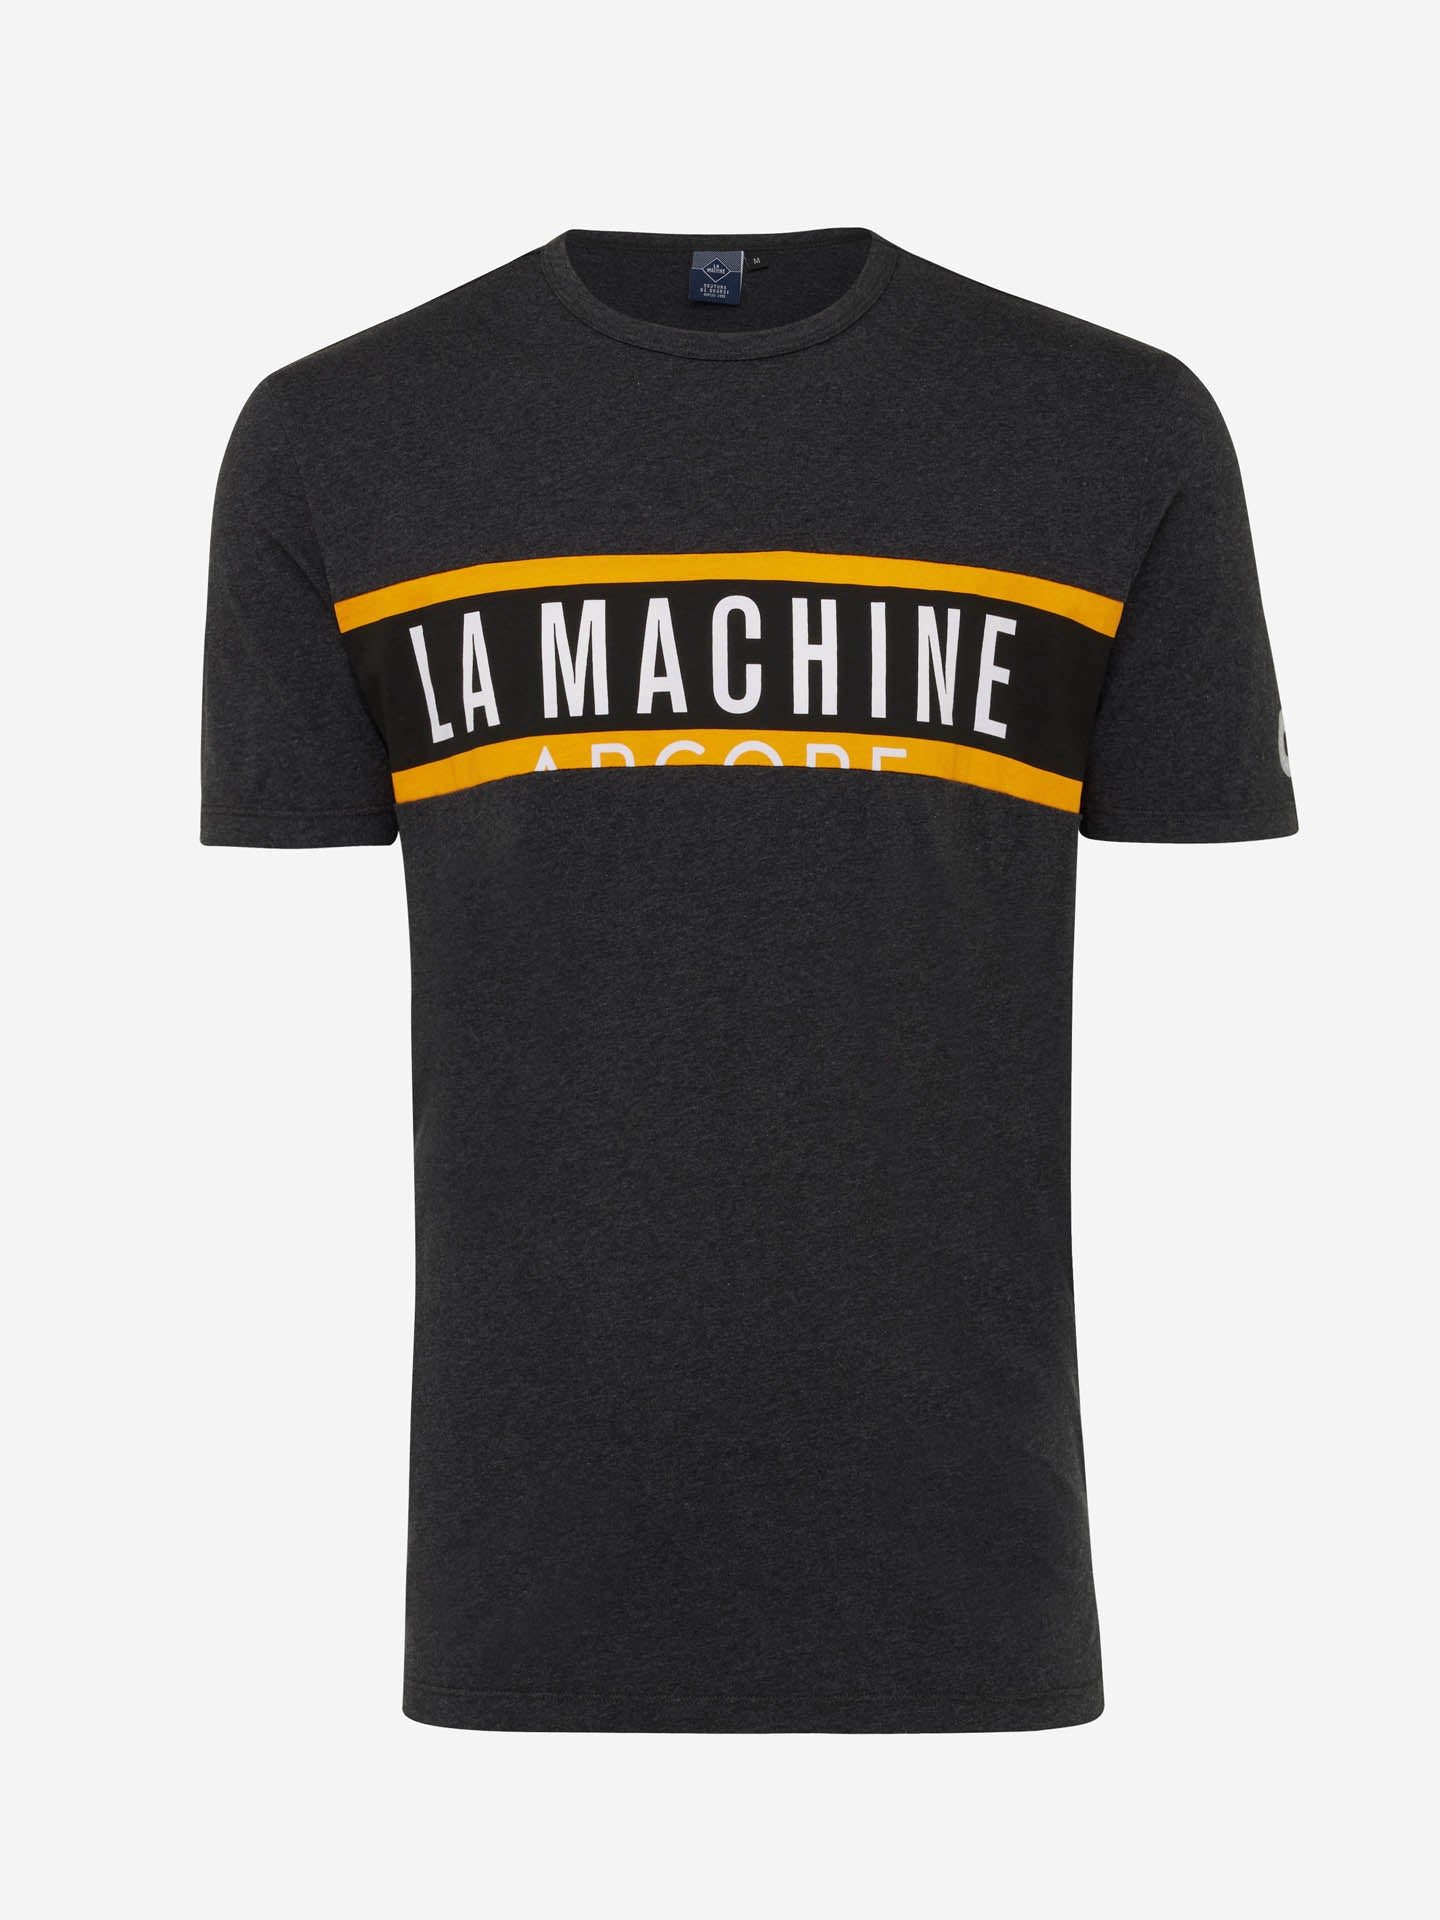 Molteni - The Remix - T-shirt -  La Machine Cycle Club.